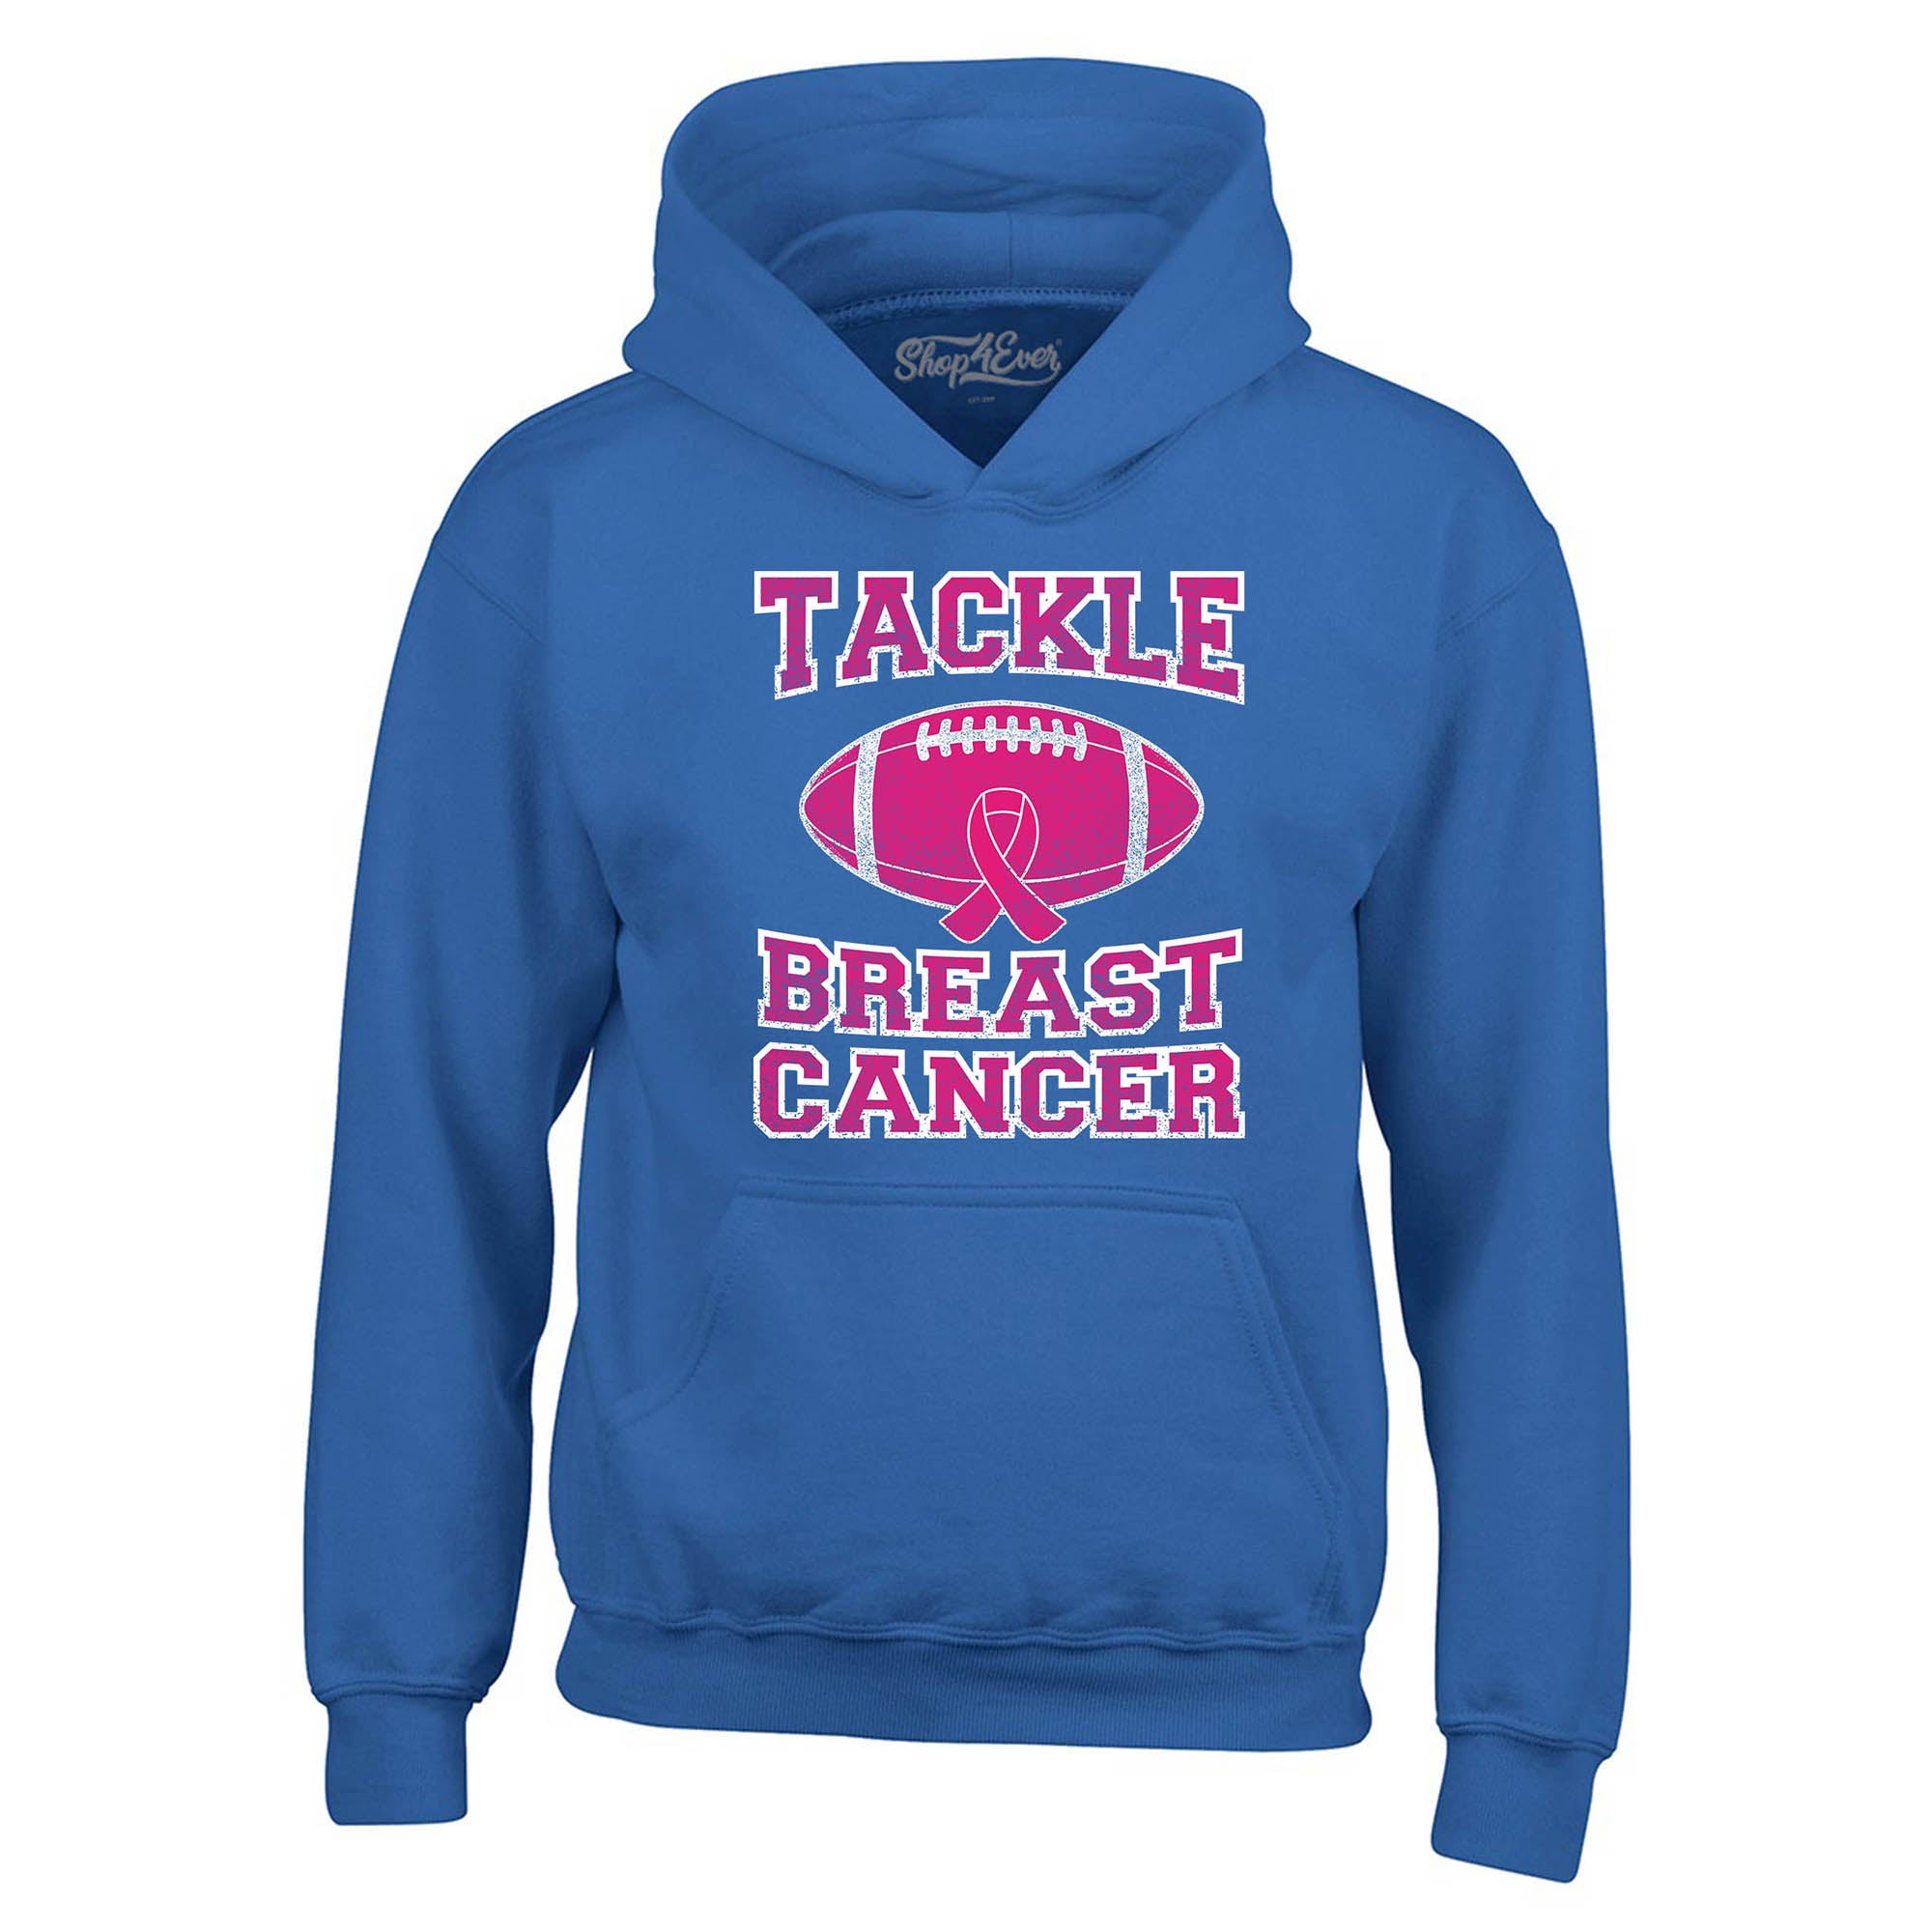 Tackle Breast Cancer Hoodies Breast Cancer Shirts Sweatshirts